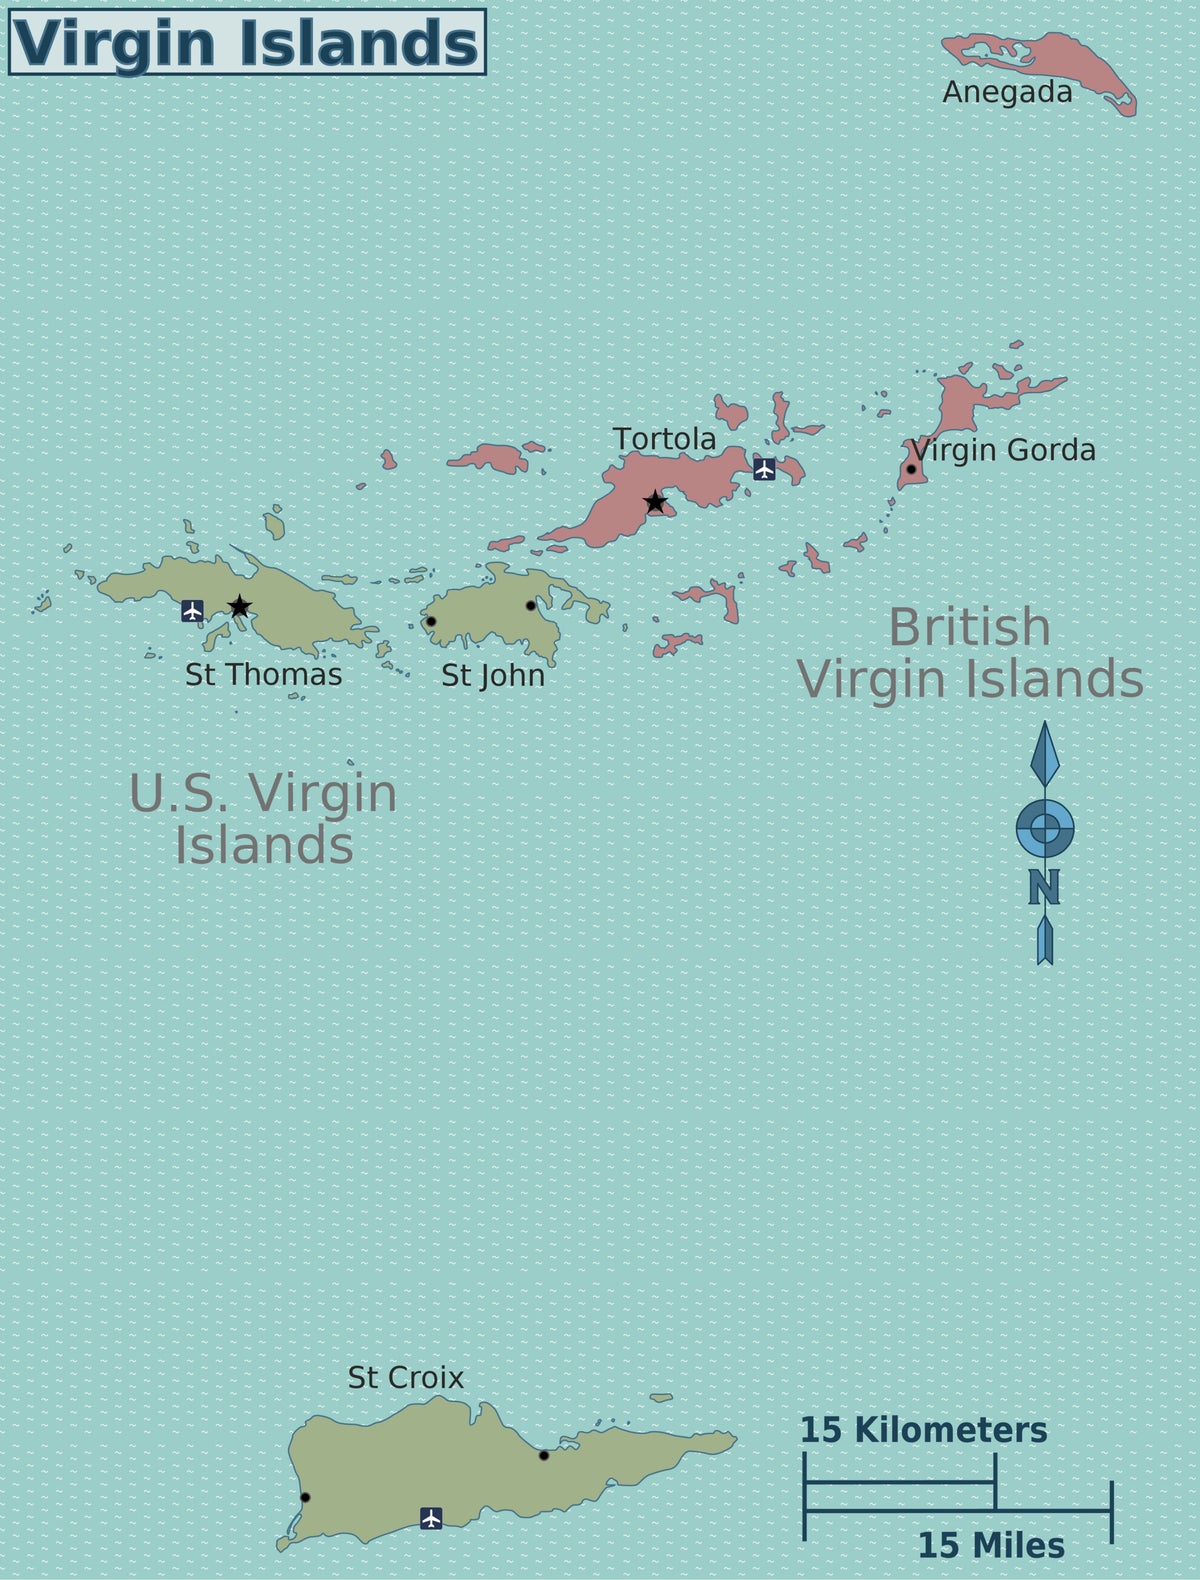 Virgin Islands regions map